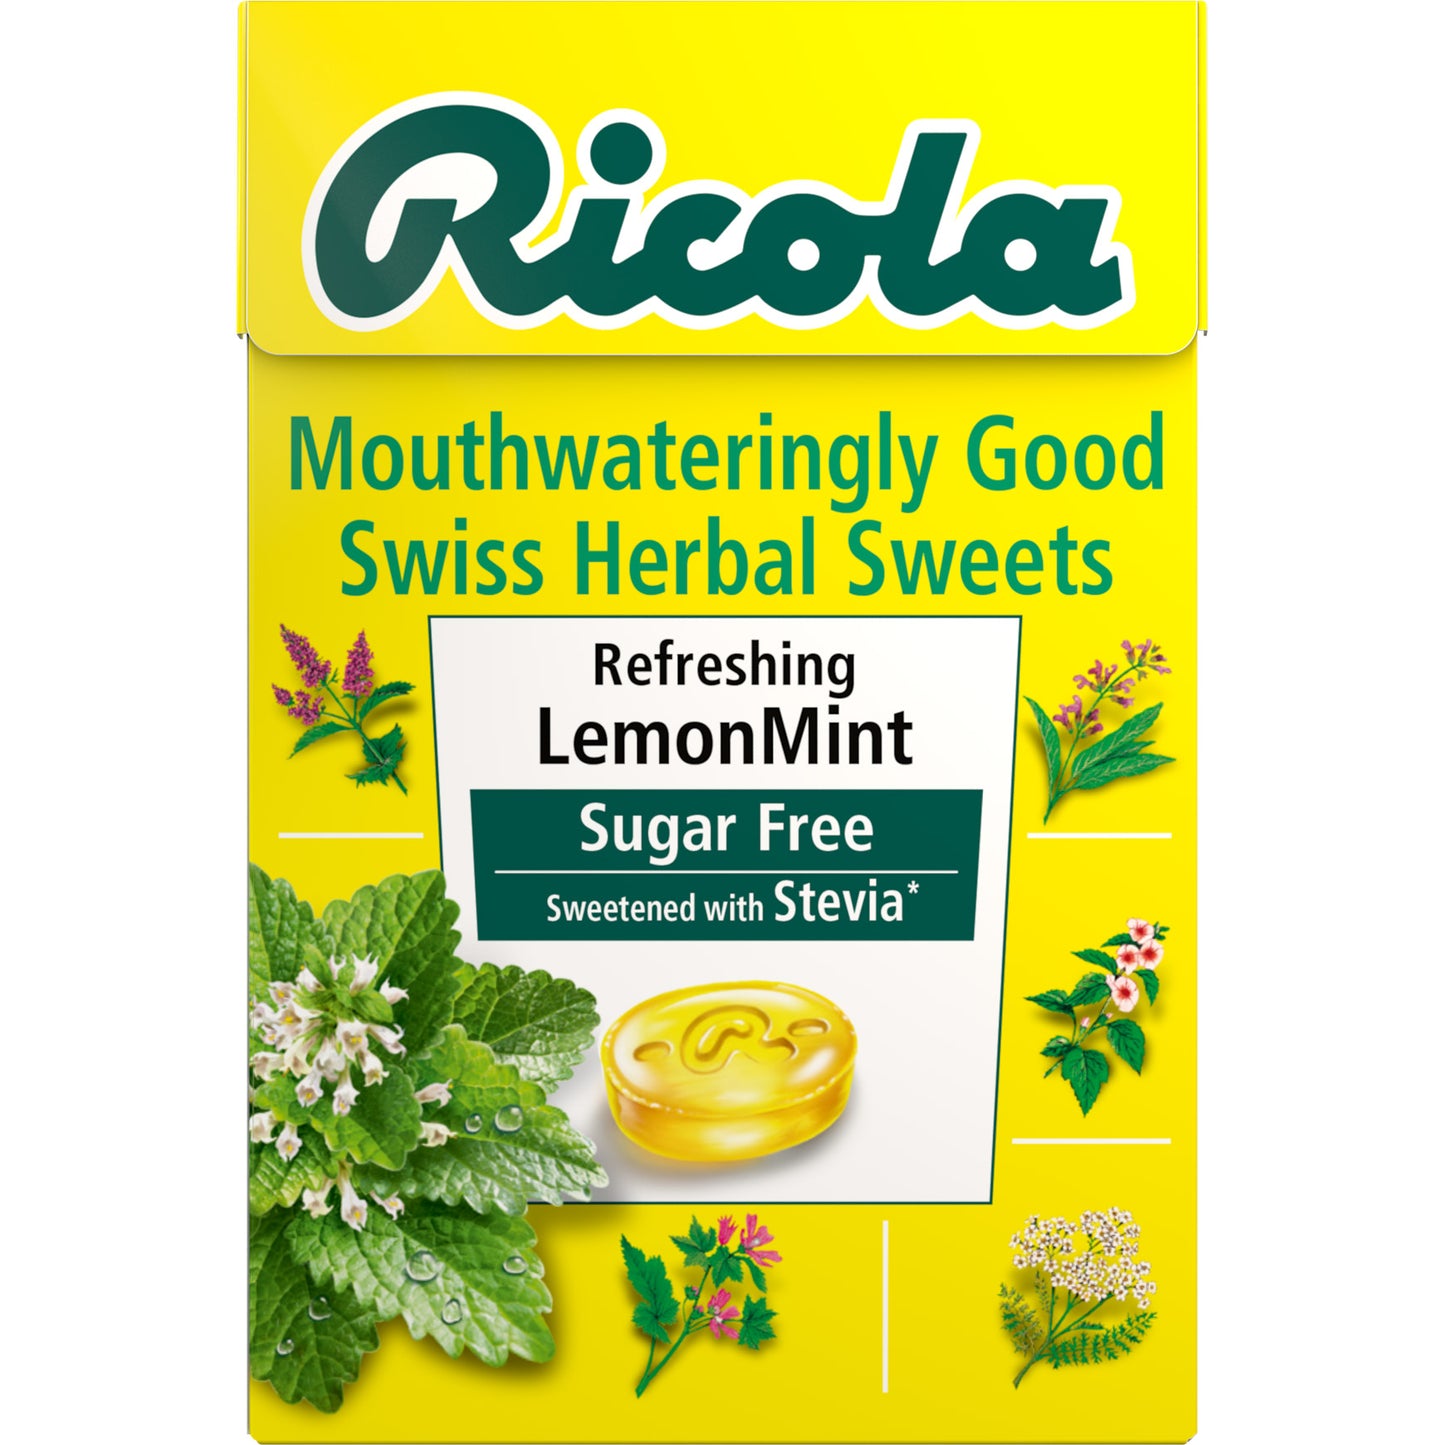 Refreshing LemonMint 45g sugar free box